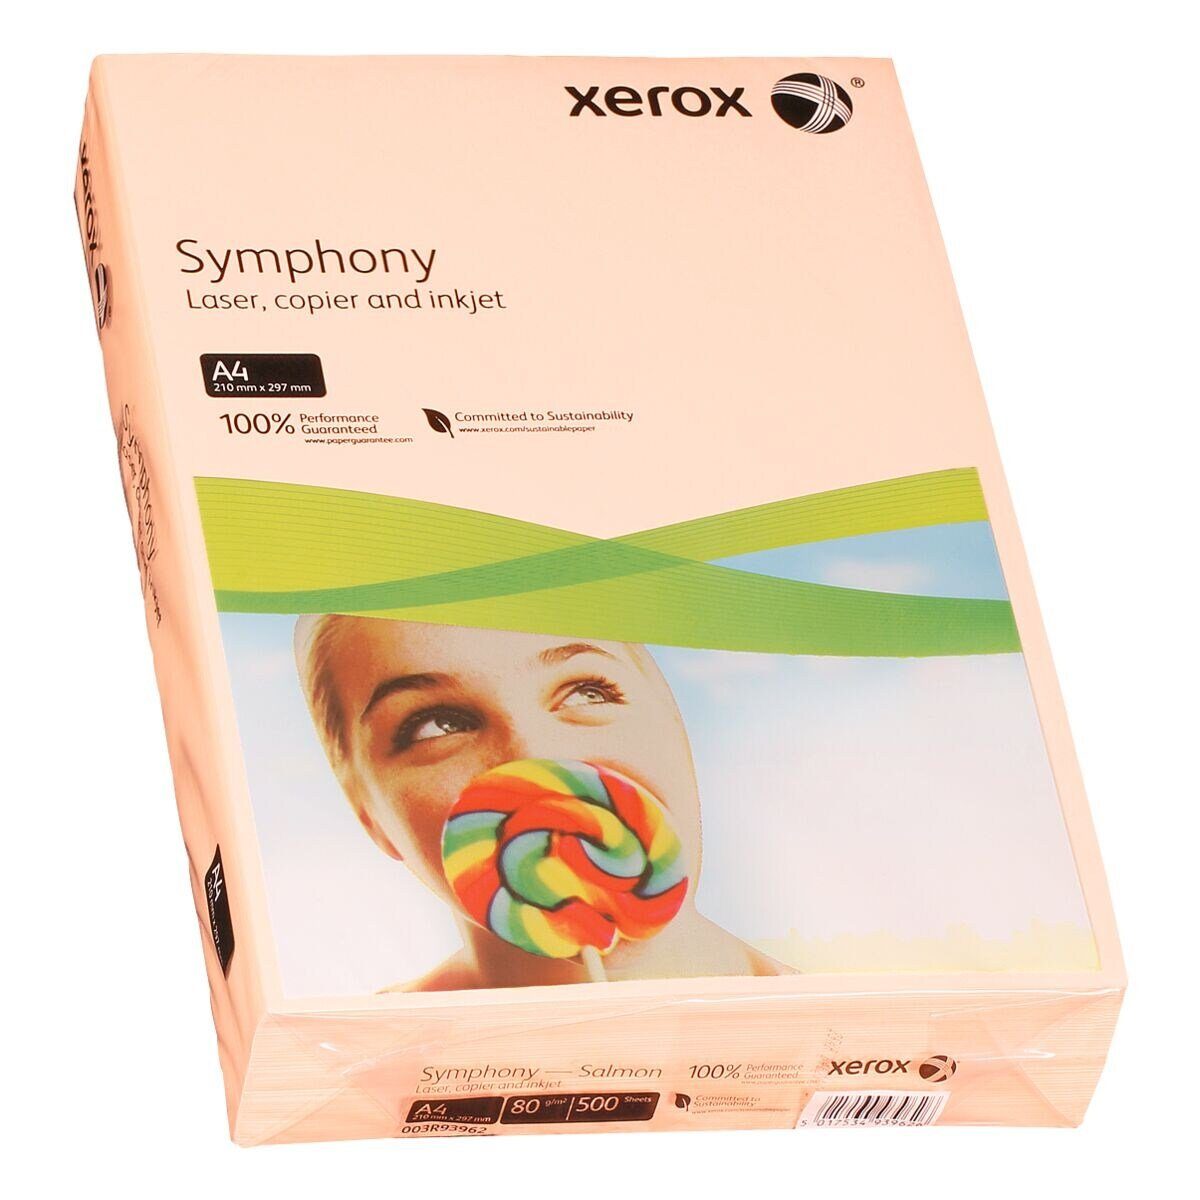 Xerox Drucker- und Format DIN Kopierpapier Symphony, lachs Blatt 80 Pastellfarben, 500 A4, g/m²